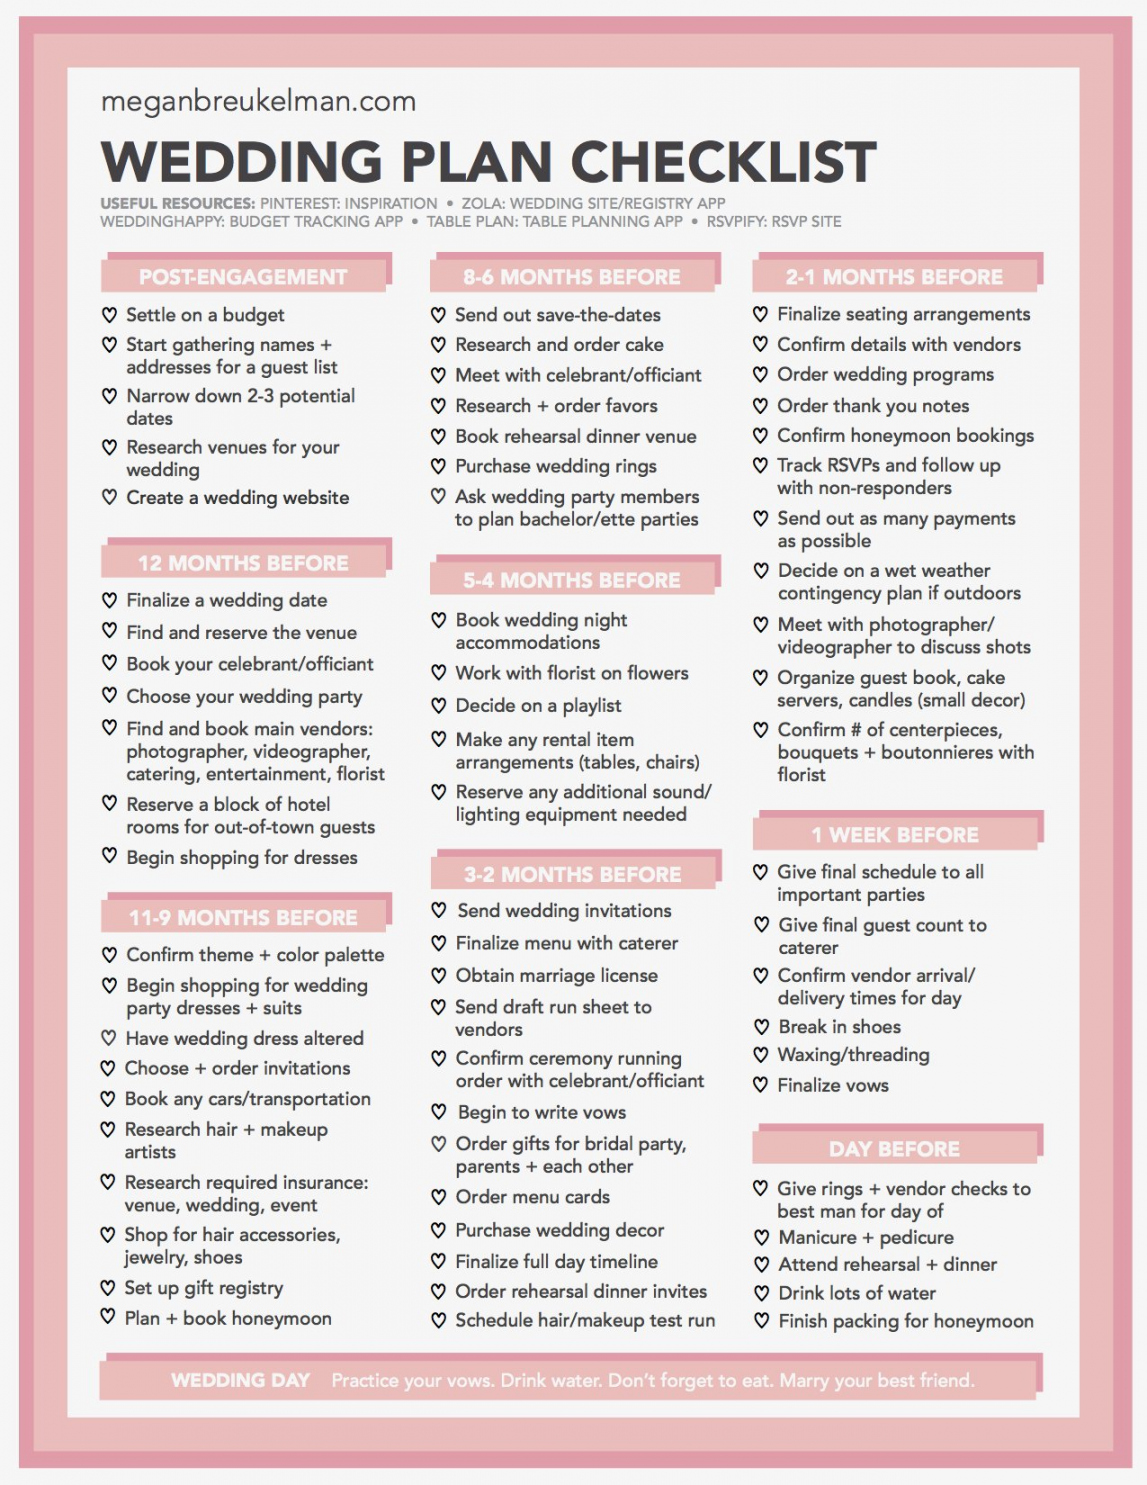 Free Printable Wedding Planning Checklist - Printable - Wedding Countdown Checklist - Free Printable Wedding Checklist PDF